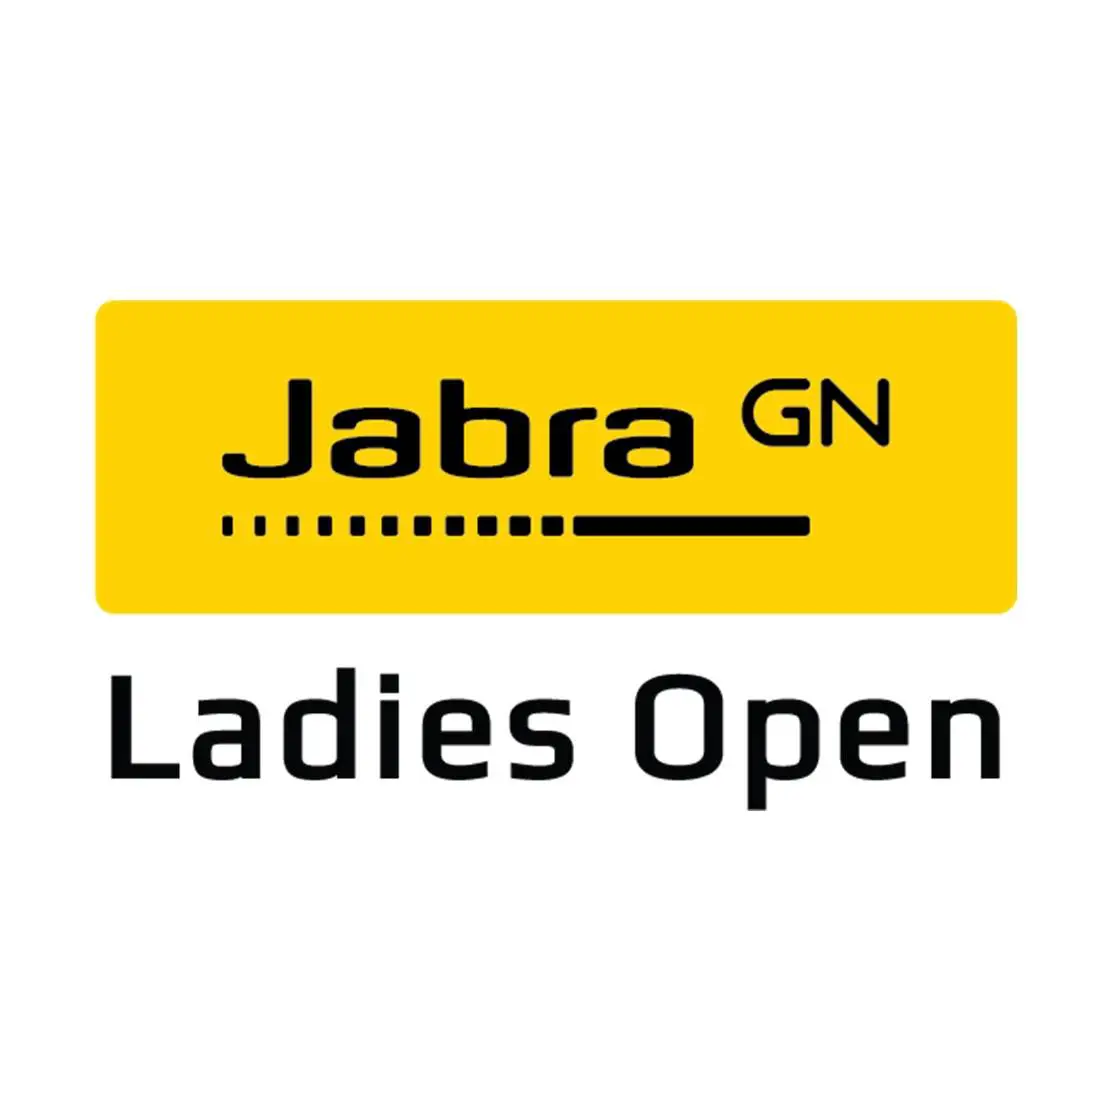 Jabra Ladies Open Logo